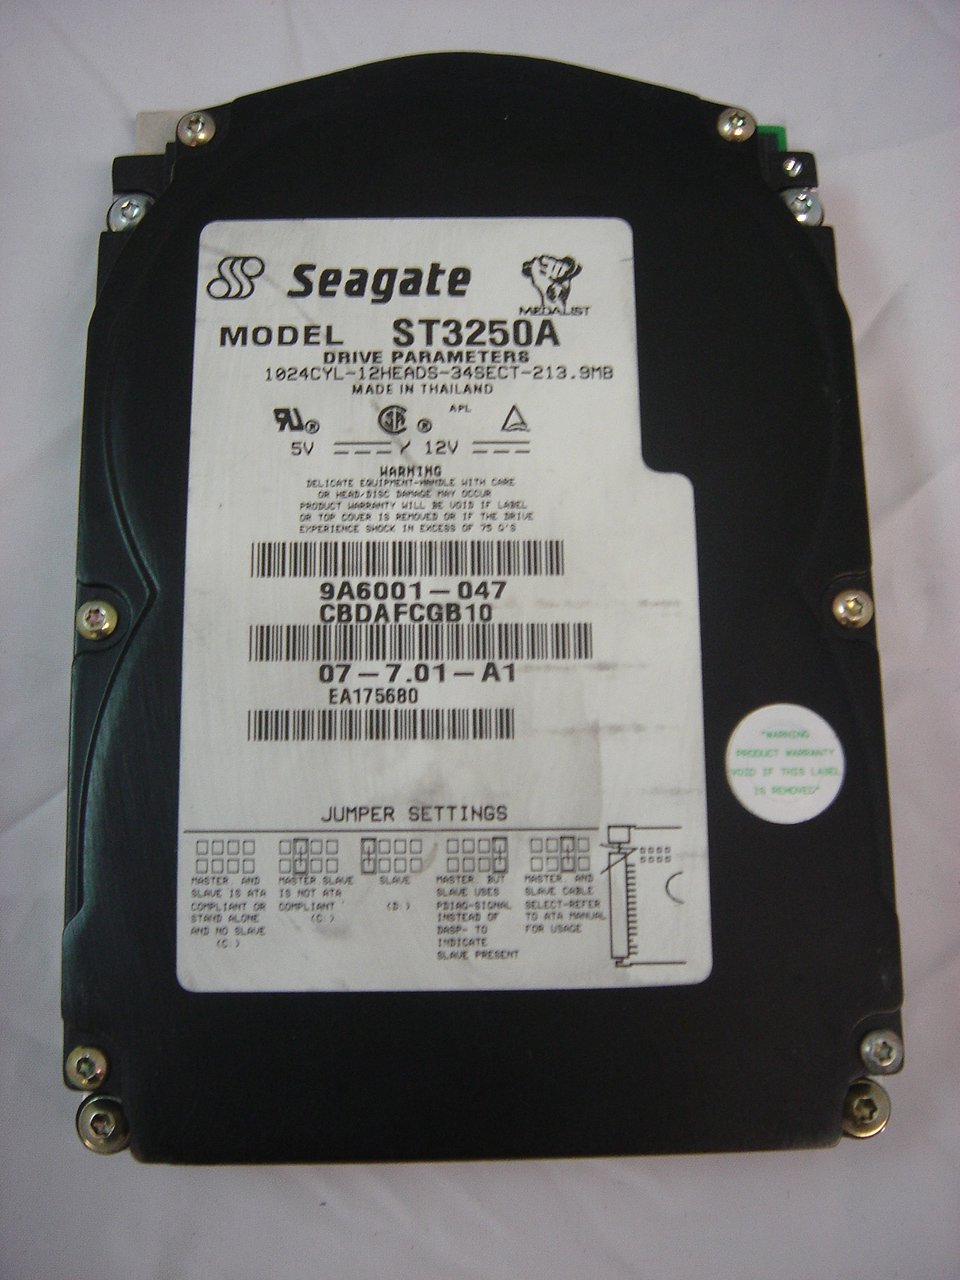 MC5510_9A6001-047_Seagate 210MB IDE (ATA-2) 3.5in HDD - Image2